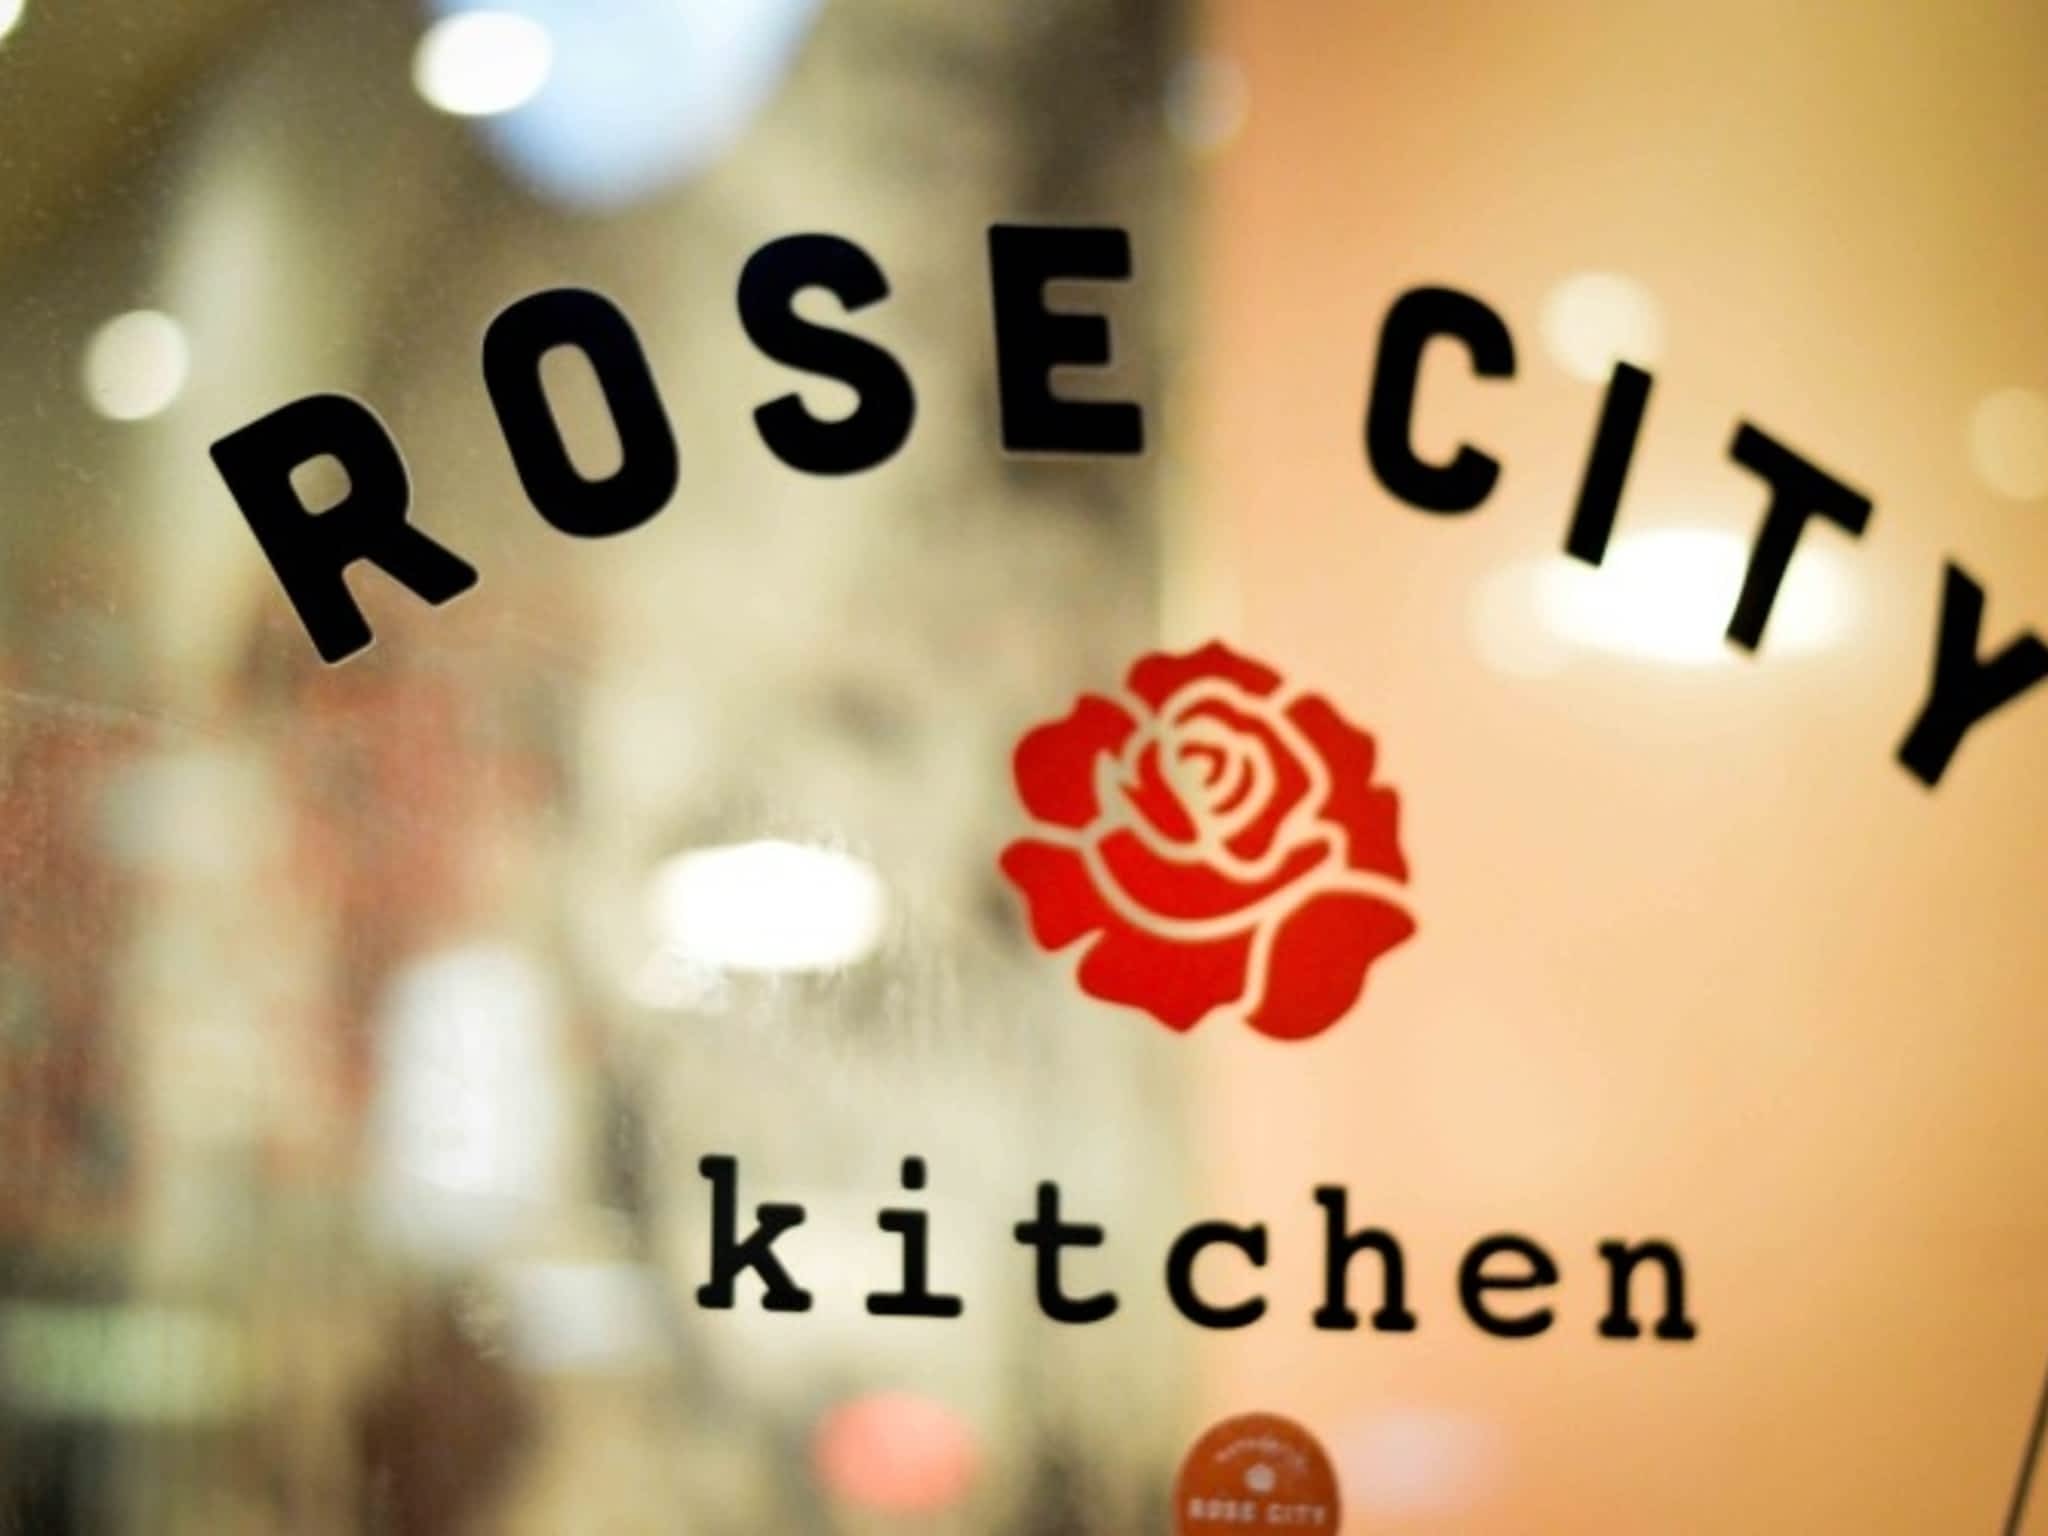 photo Rose City Kitchen